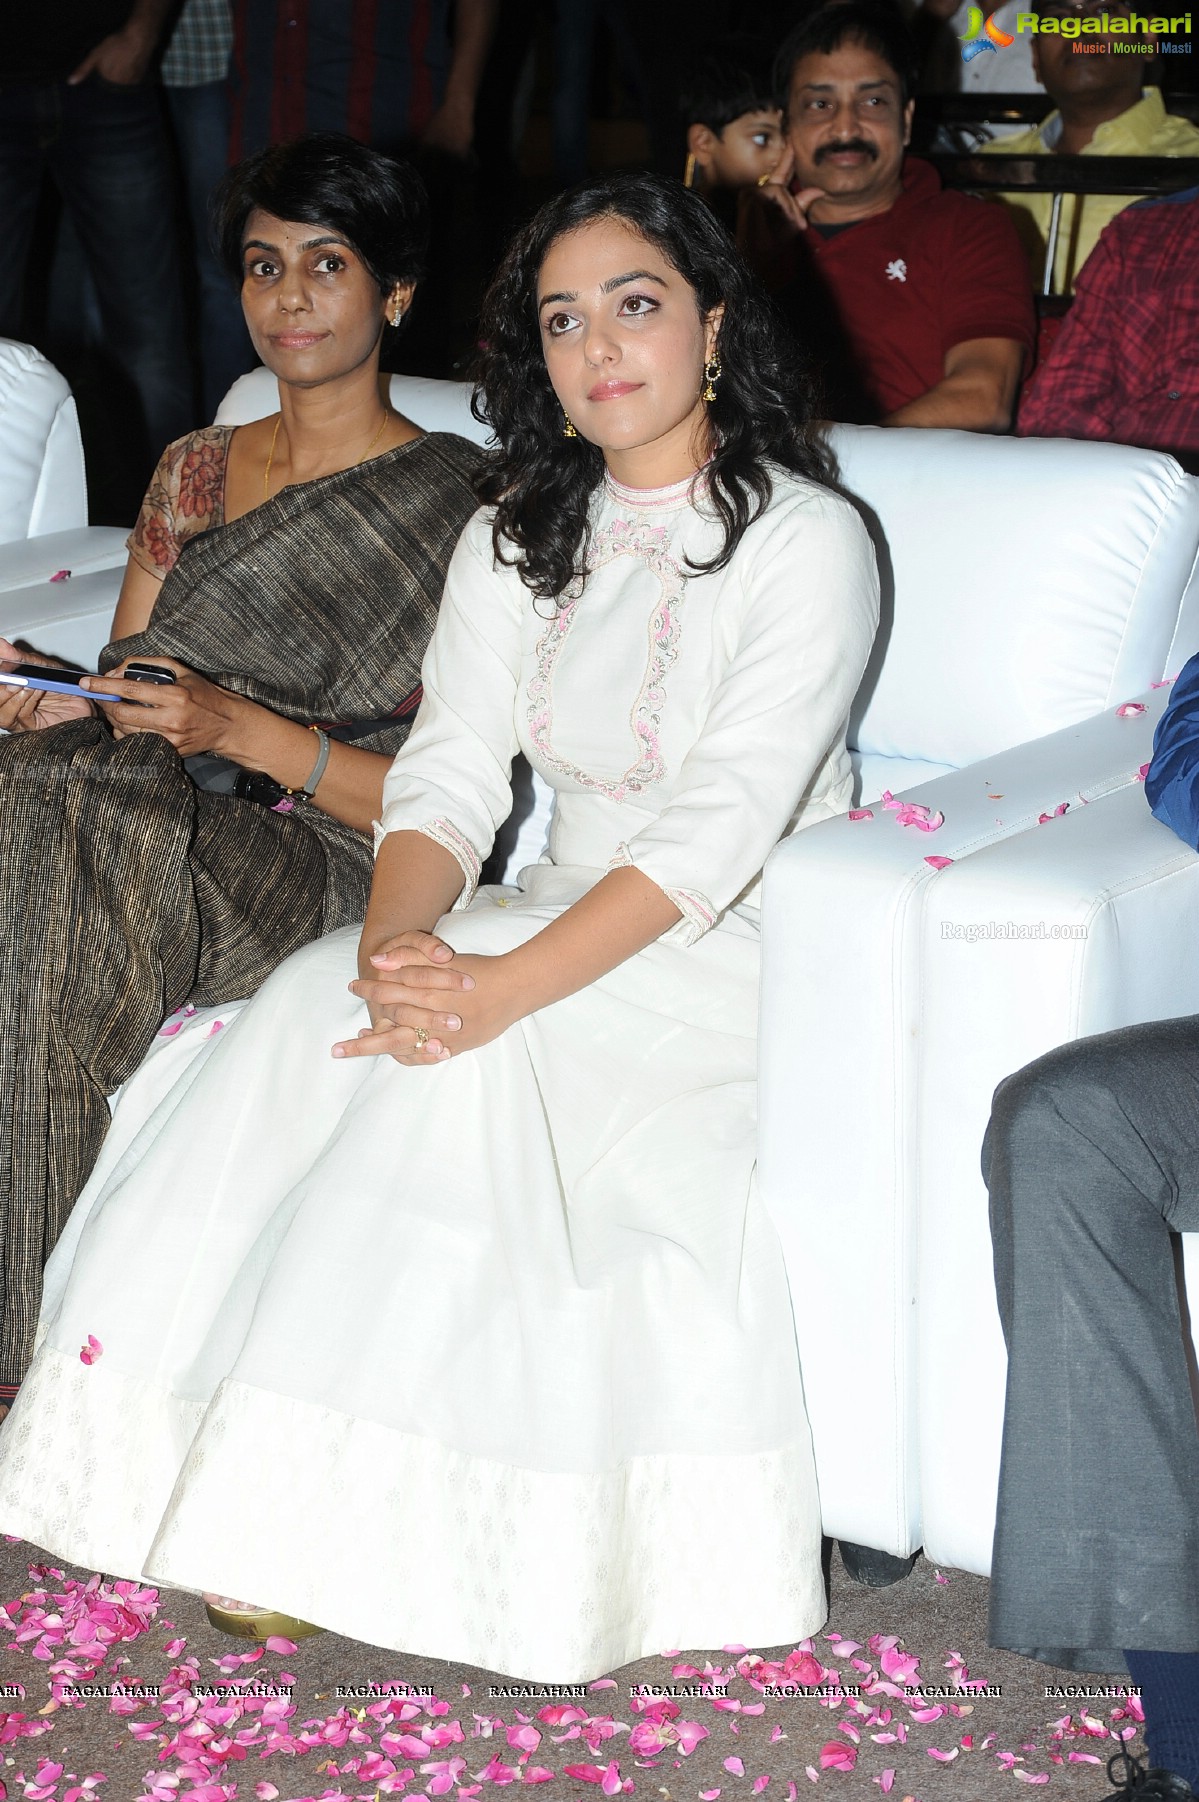 Nithya Menen at Malli Malli Idi Rani Roju Audio Release, Photo Gallery